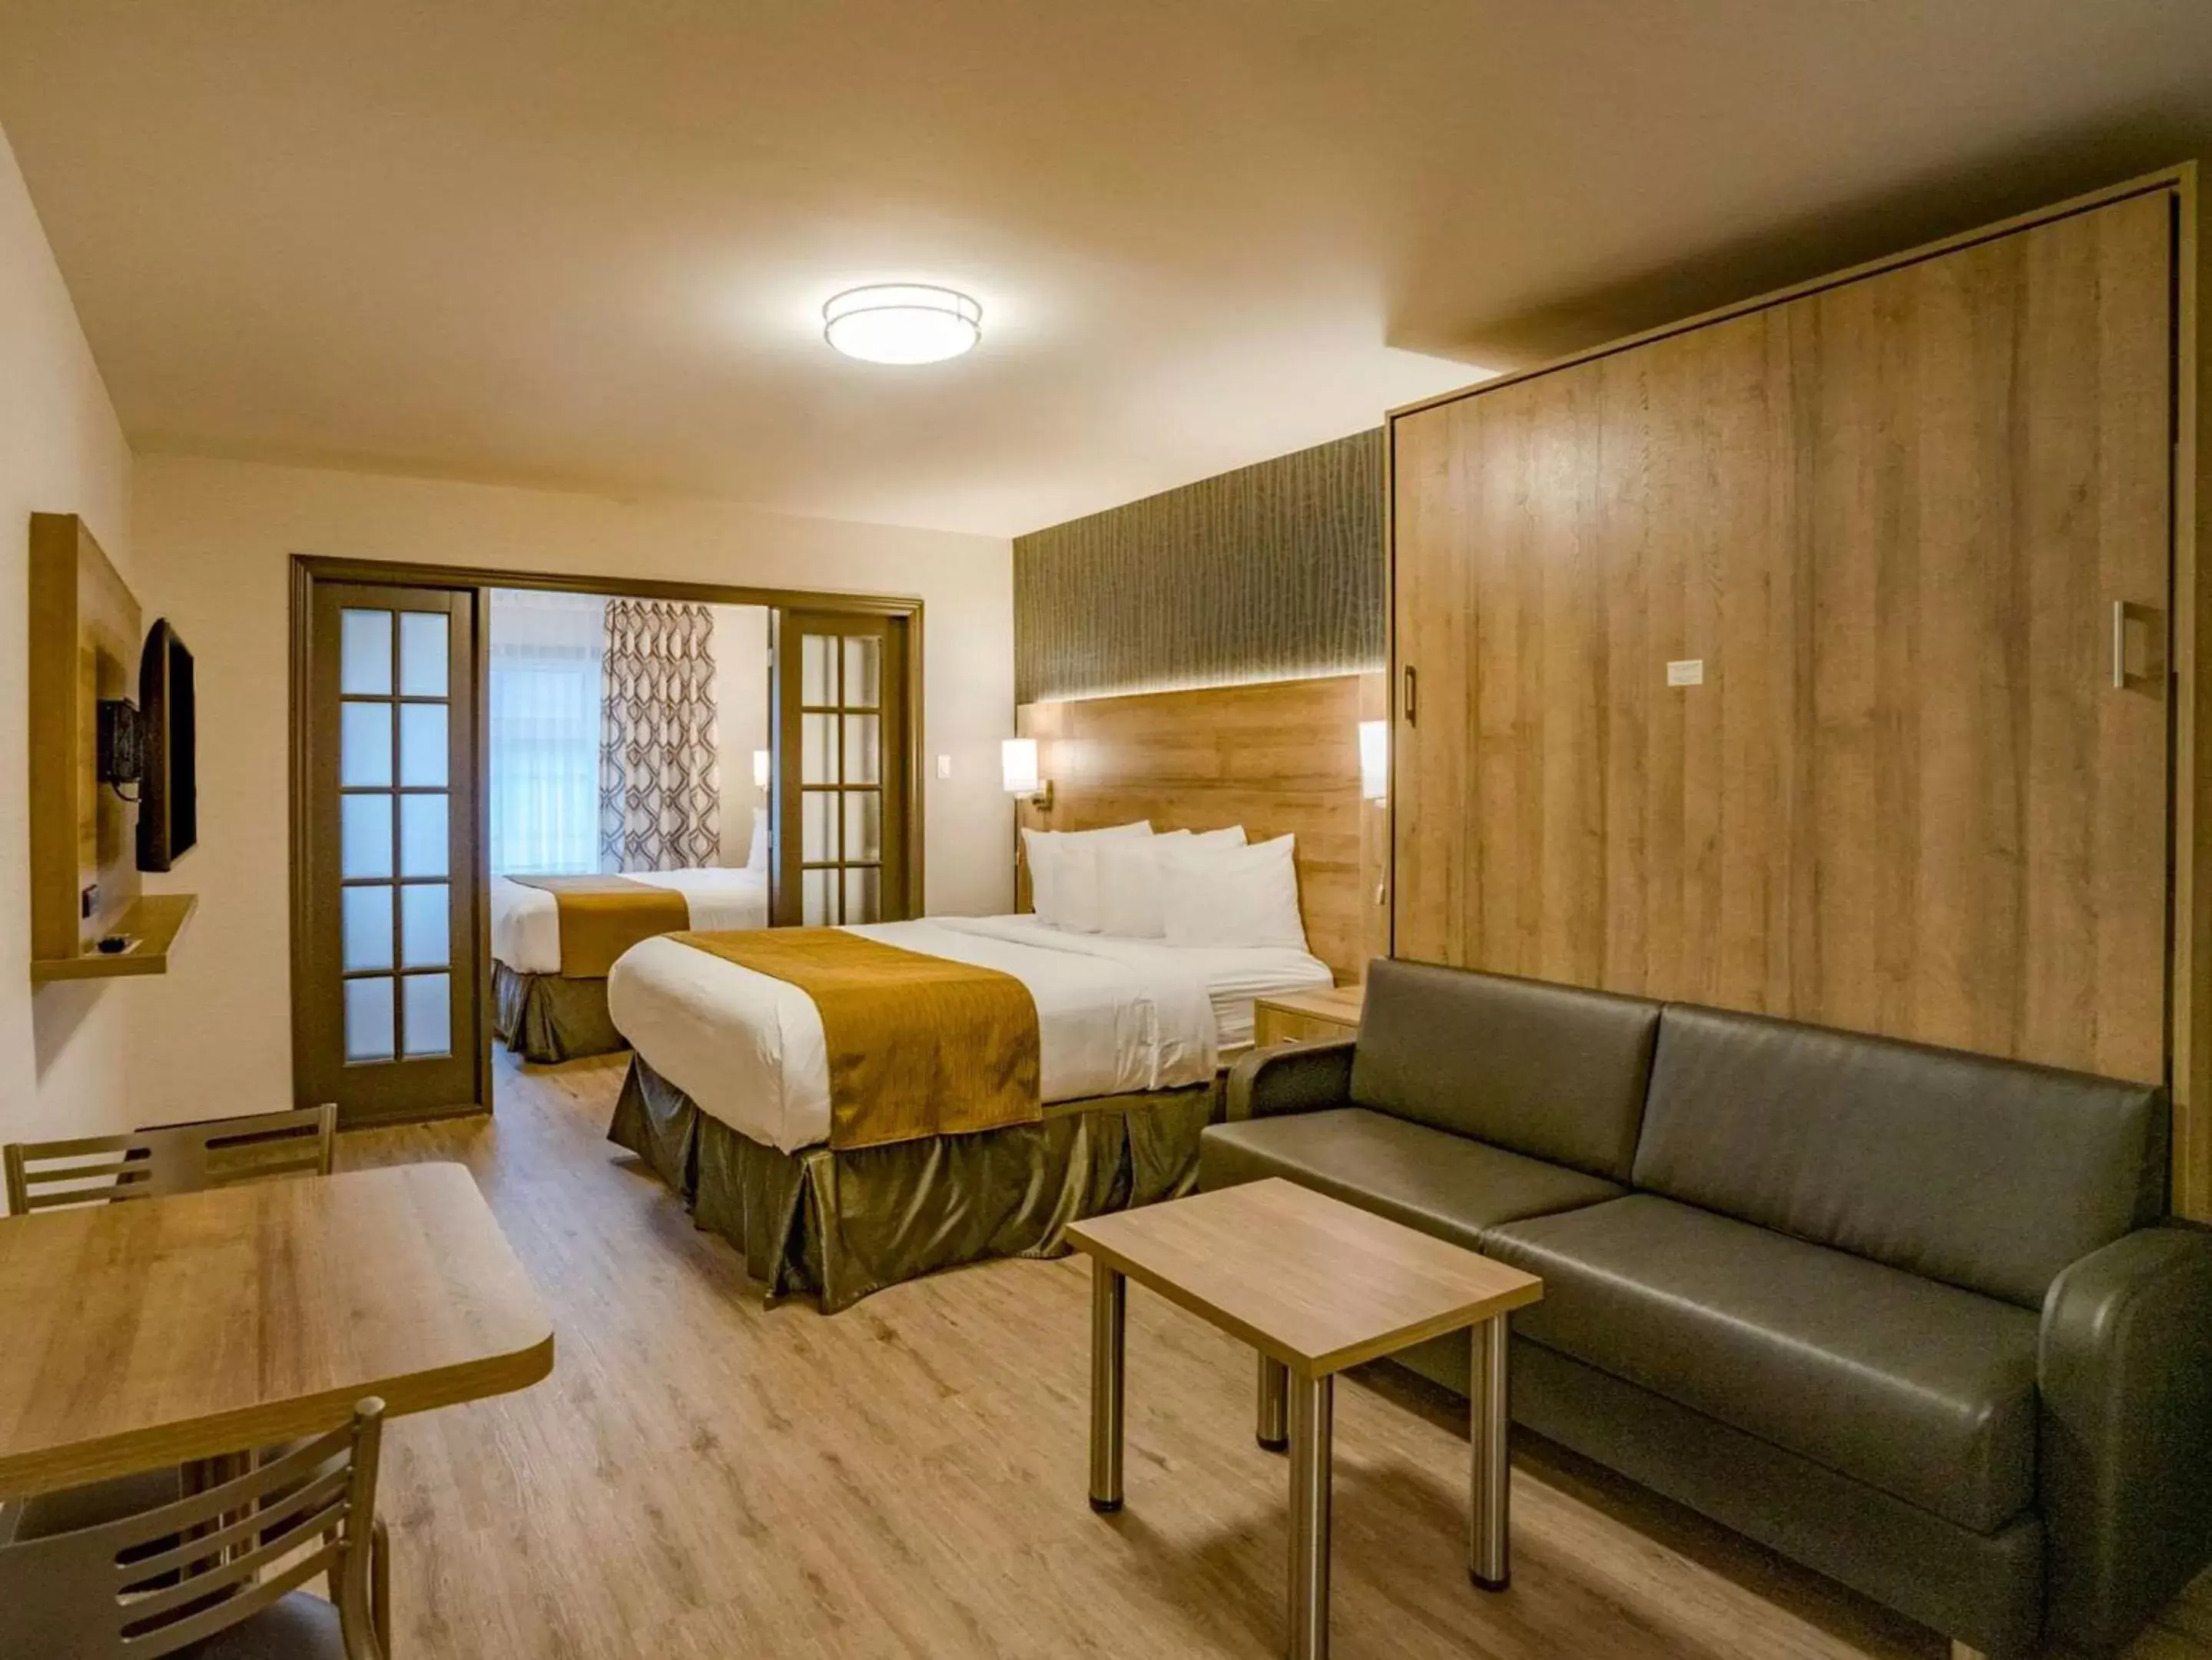 Bedroom in Hôtel Quality Suites Drummondville